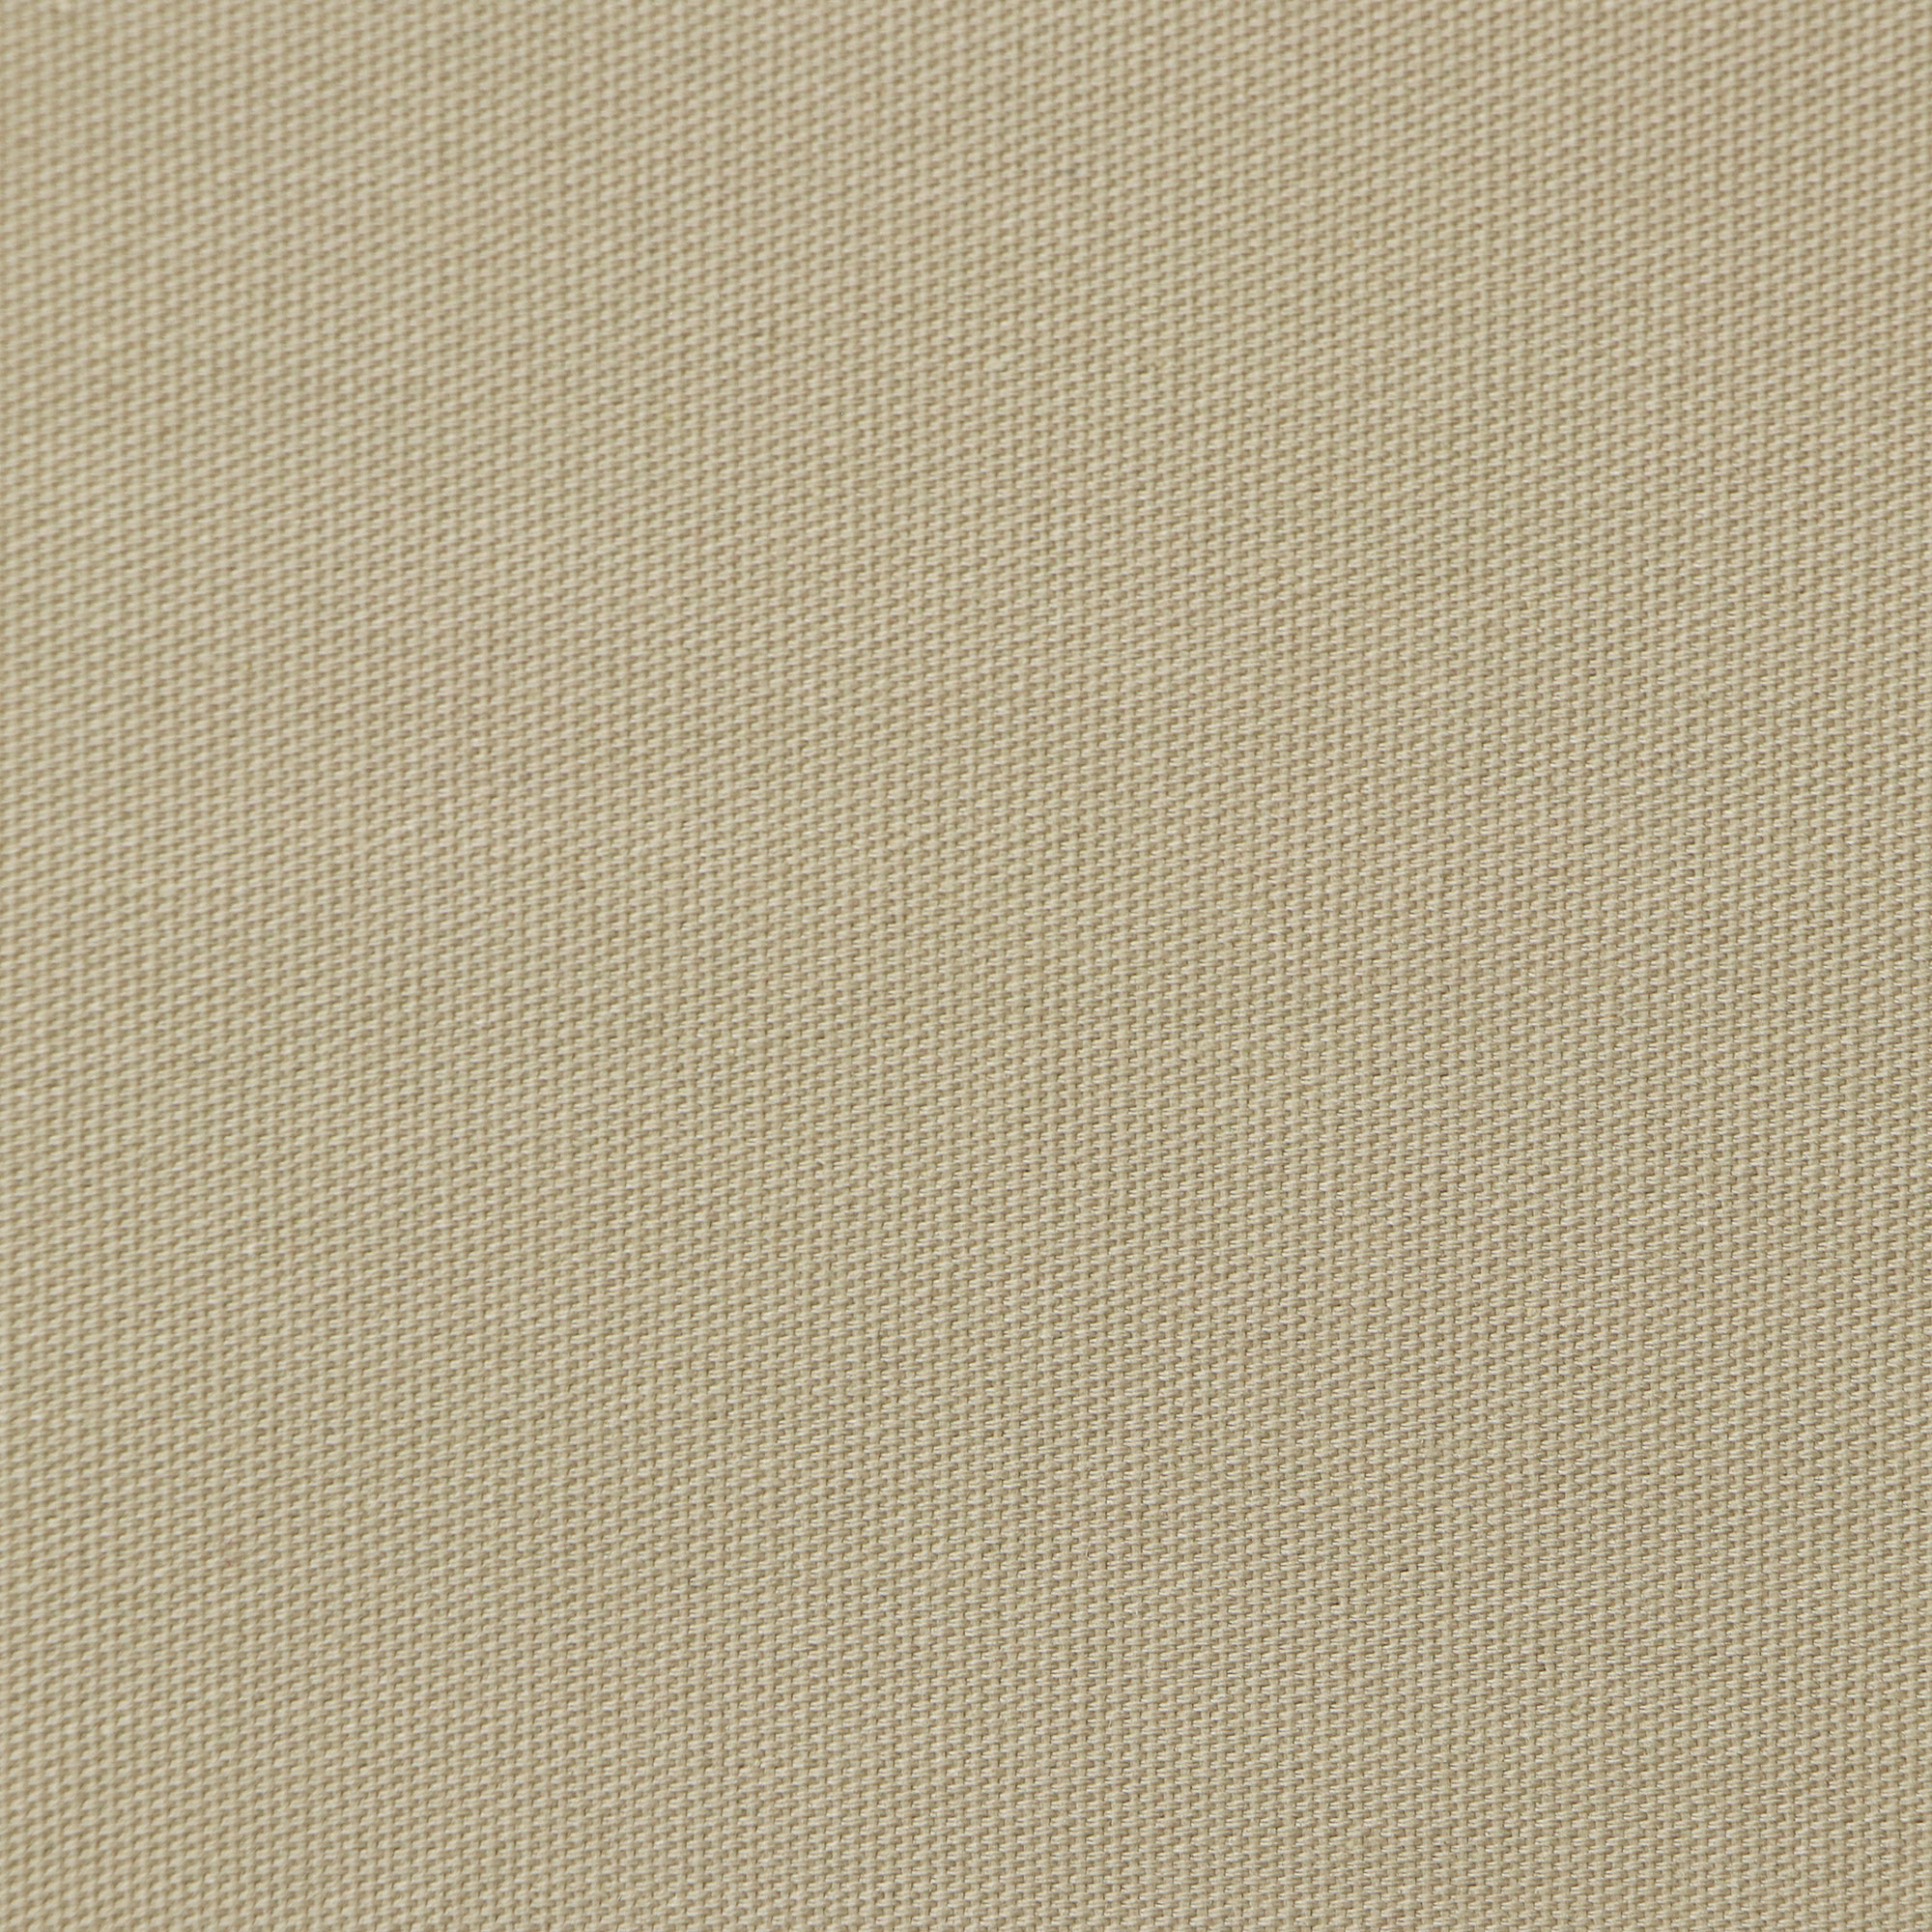 Комплект мебели NS Rattan Sky коричневый с бежевым 4 предмета, цвет бежевый, размер 180х78х78 - фото 19